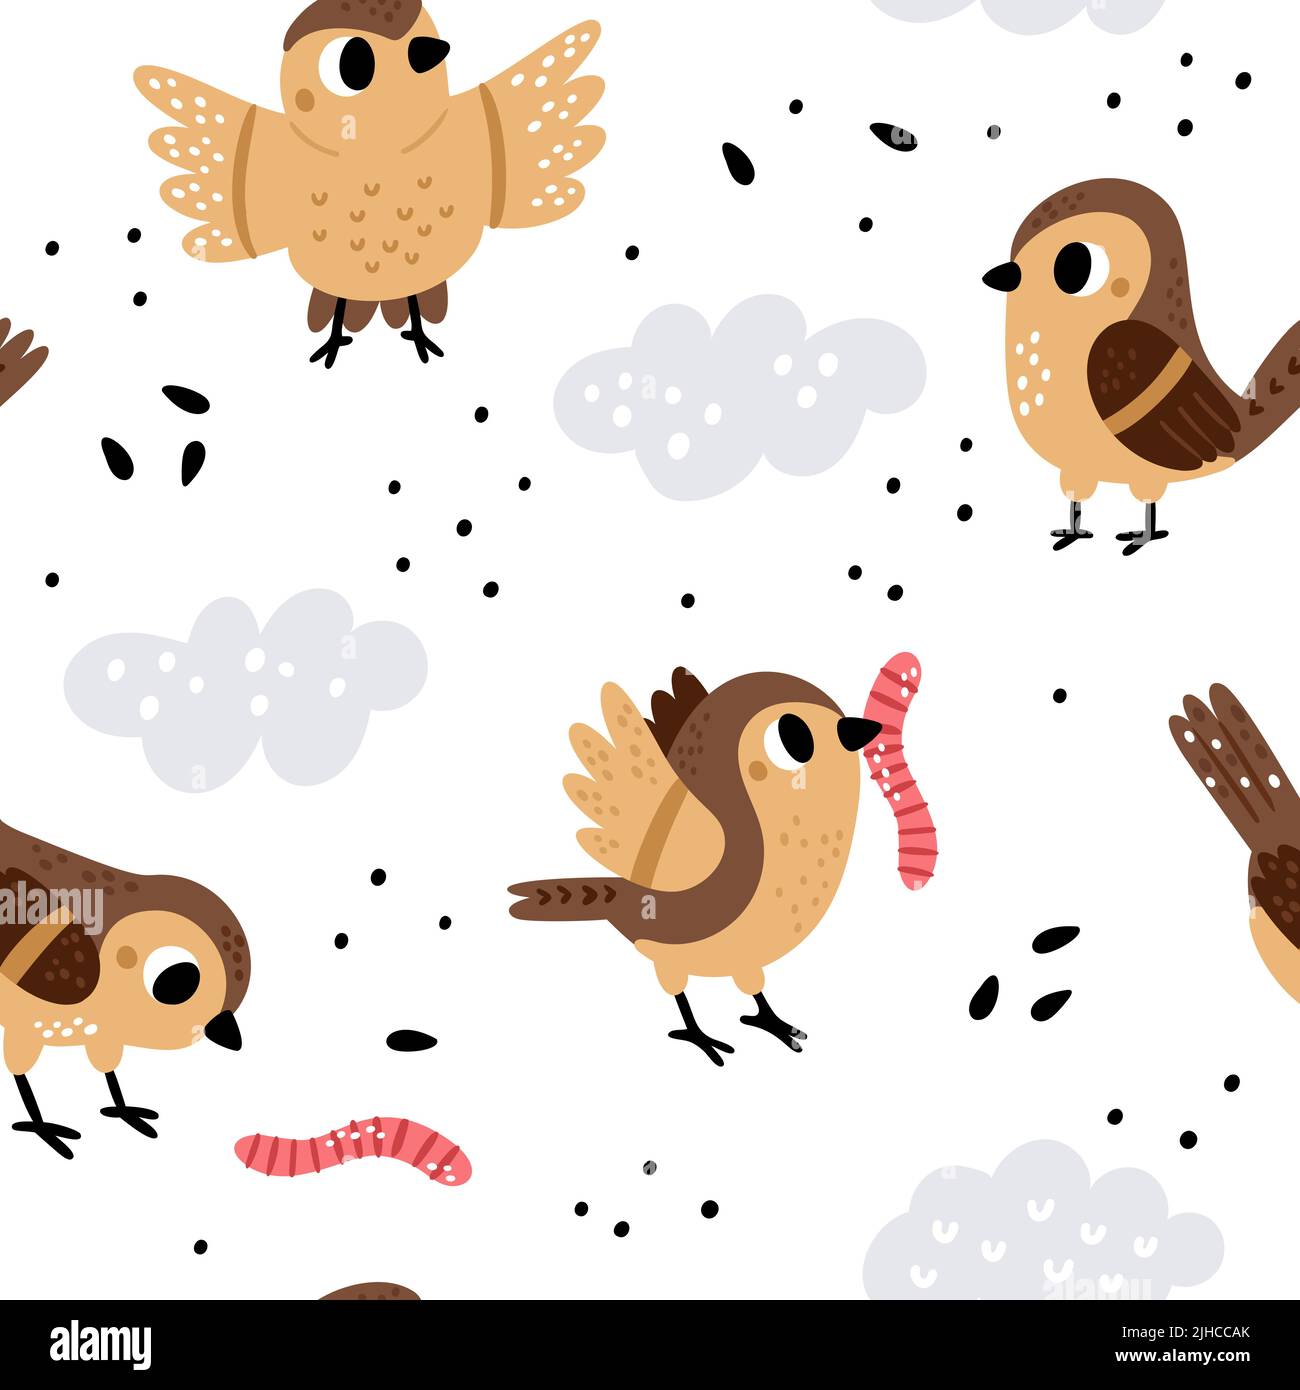 Cute sparrows seamless pattern. Cartoon print with brown birds. Flying animals pecking seeds and caterpillars. City fauna. Urban inhabitants. Avian Stock Vector